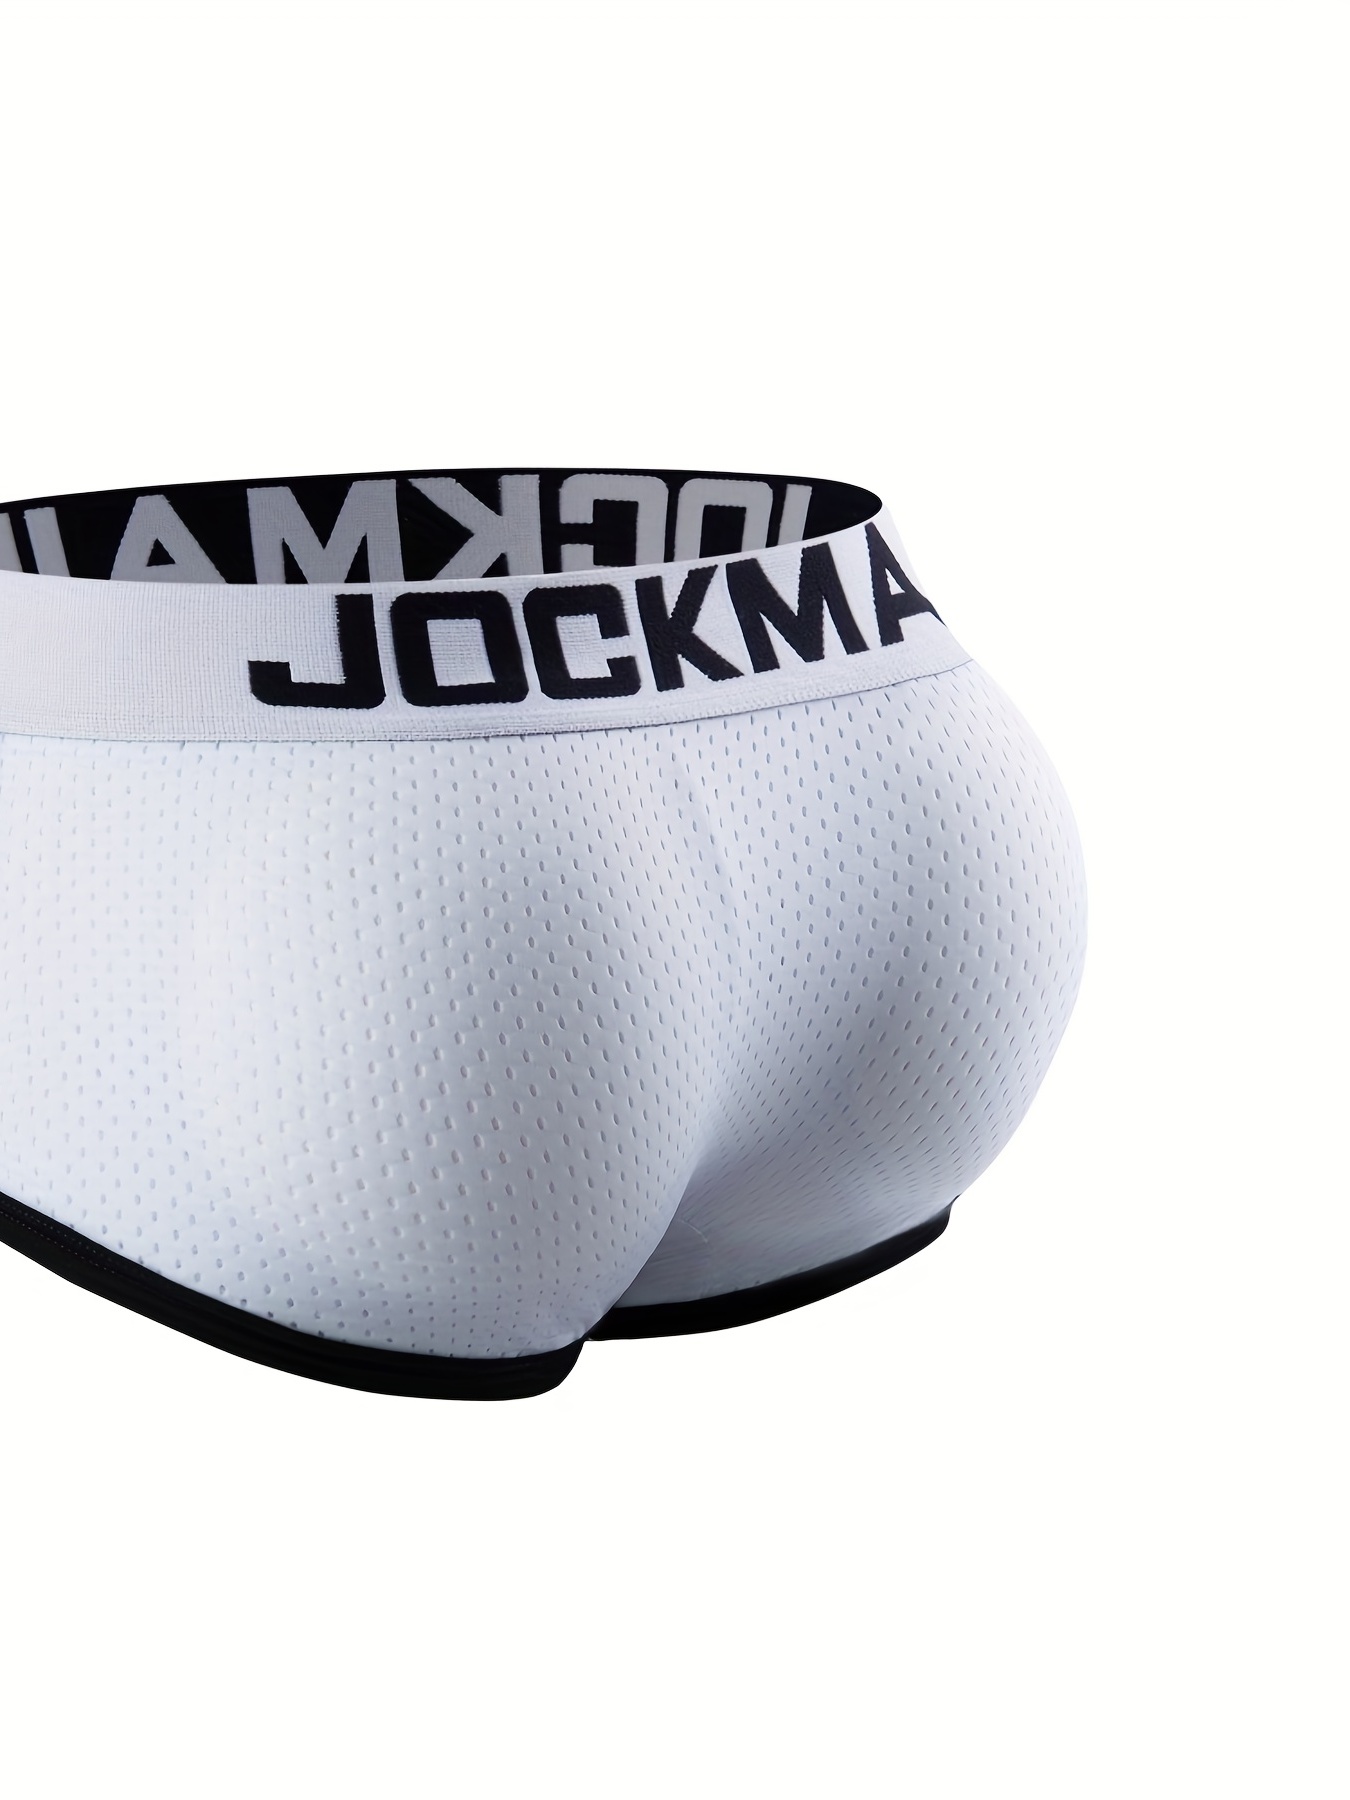 JOCKMAIL Fashion Hot Men Underwear Boxers Mesh Men Panties Male